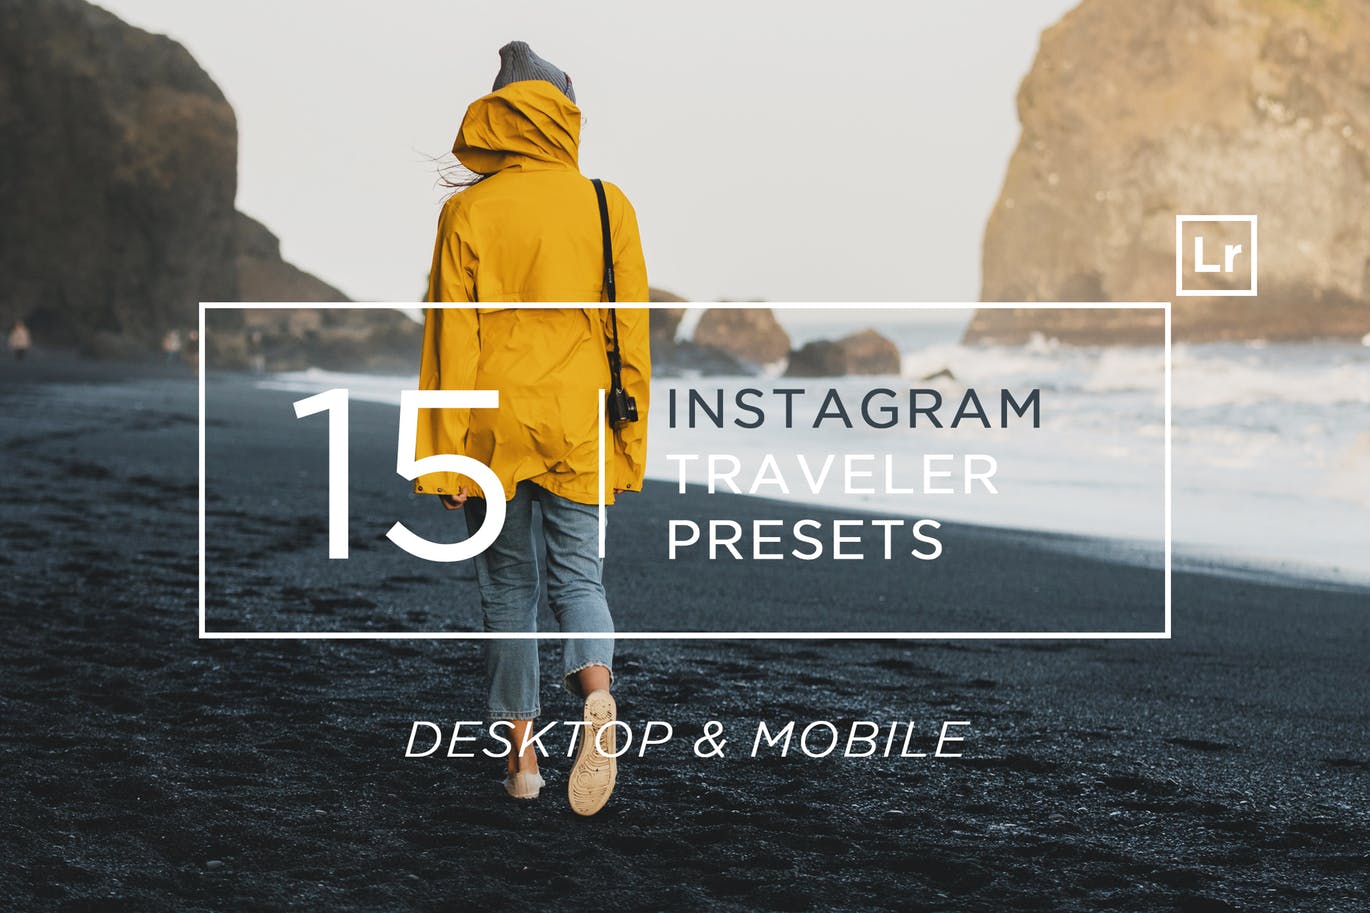 15款Instagram社交旅行照片滤镜风格16图库精选LR预设 15 Instagram Traveler Ligtroom Presets + Mobile插图